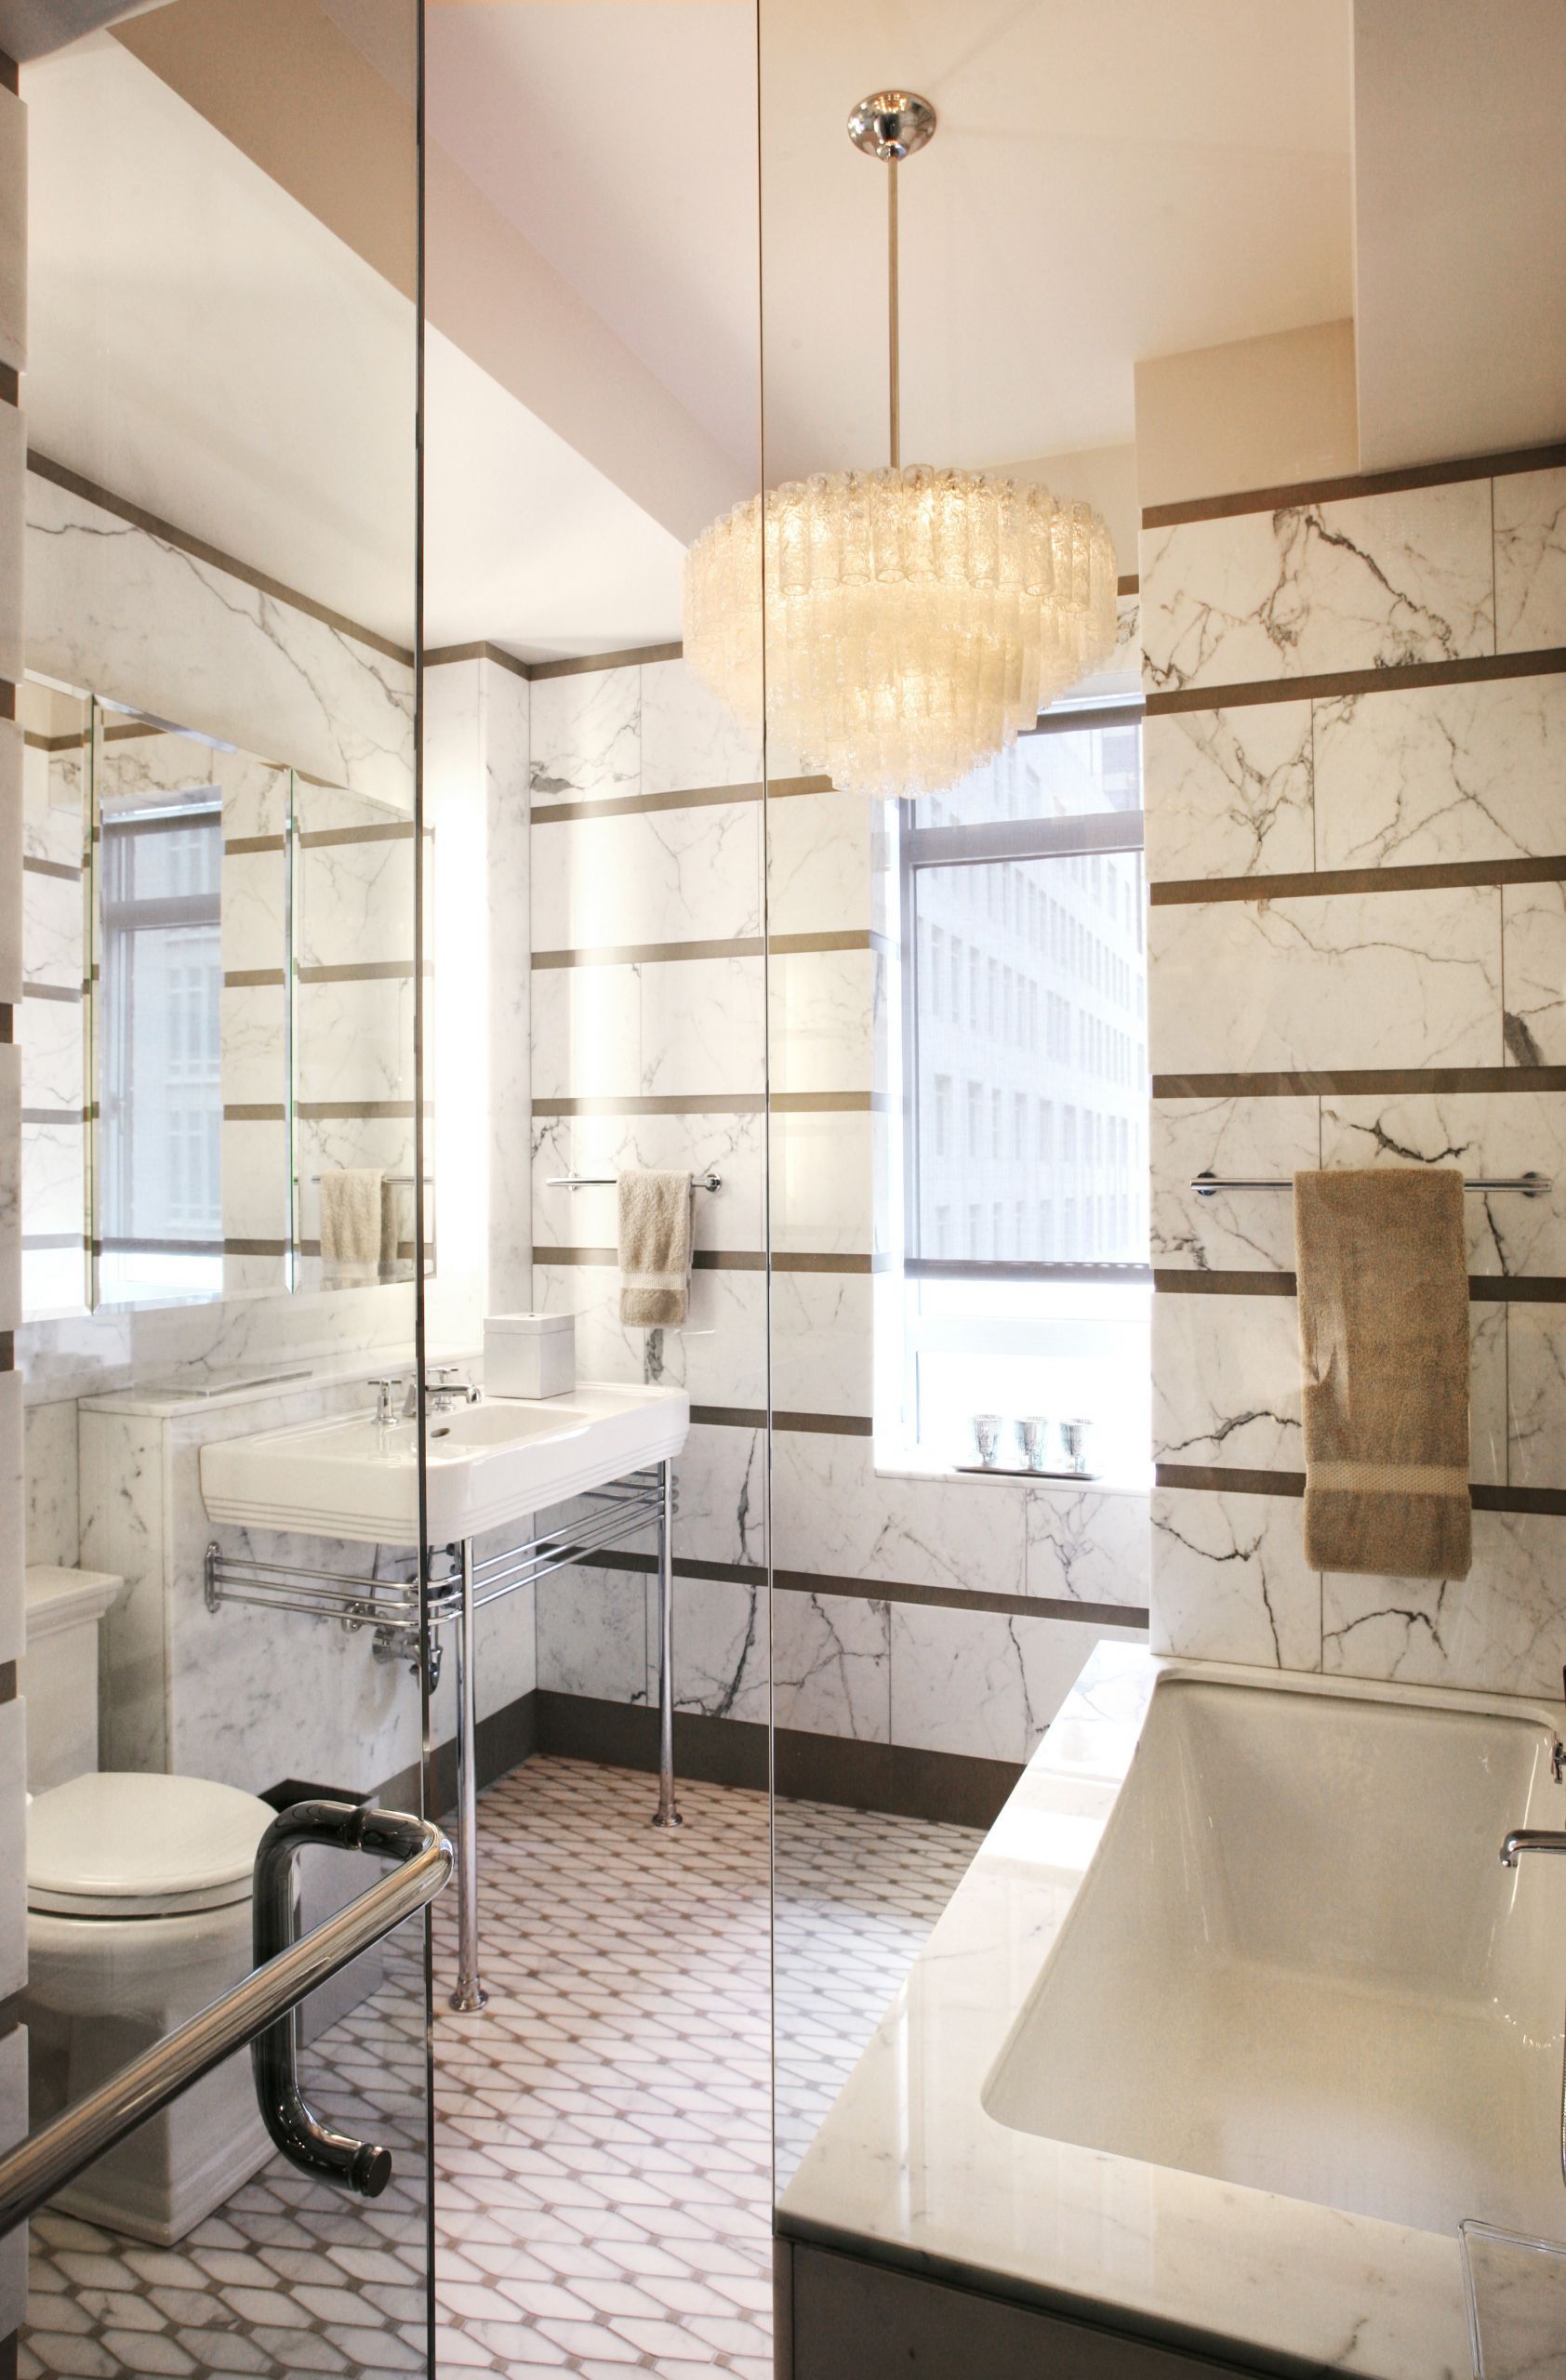 New Bathroom Designs
 A 1930s NYC Apartment Gets an Elegant New Bathroom Design